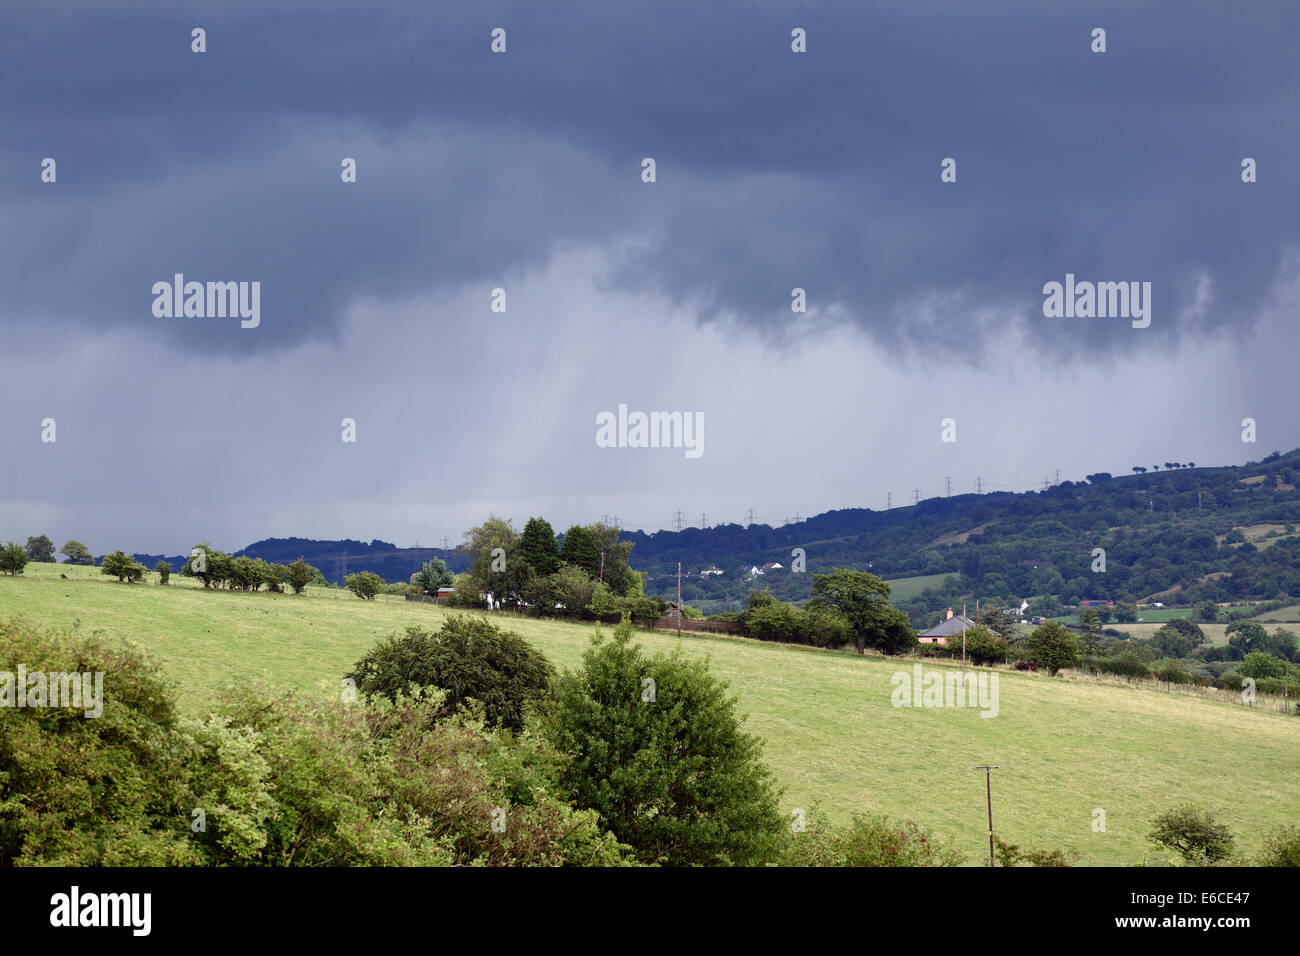 Storm clouds approaching over the Renfrewshire countryside near Lochwinnoch in Scotland's central belt, UK Stock Photo